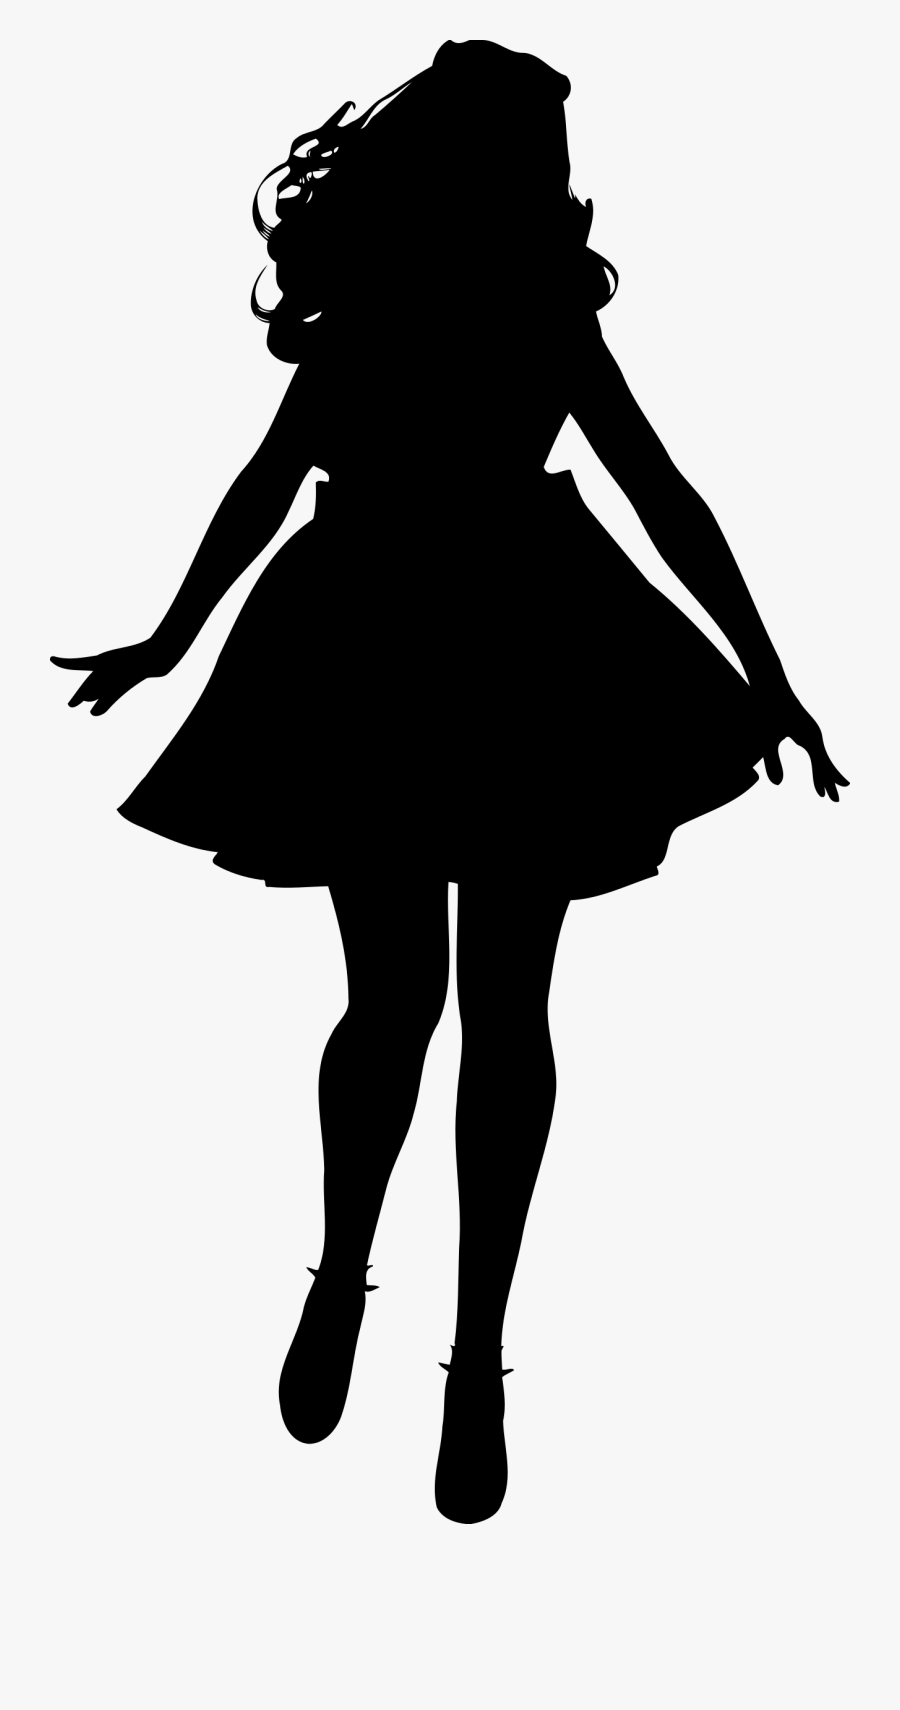 Woman Dancing 2 Clip Arts - Woman Walking Silhouette Gif, Transparent Clipart